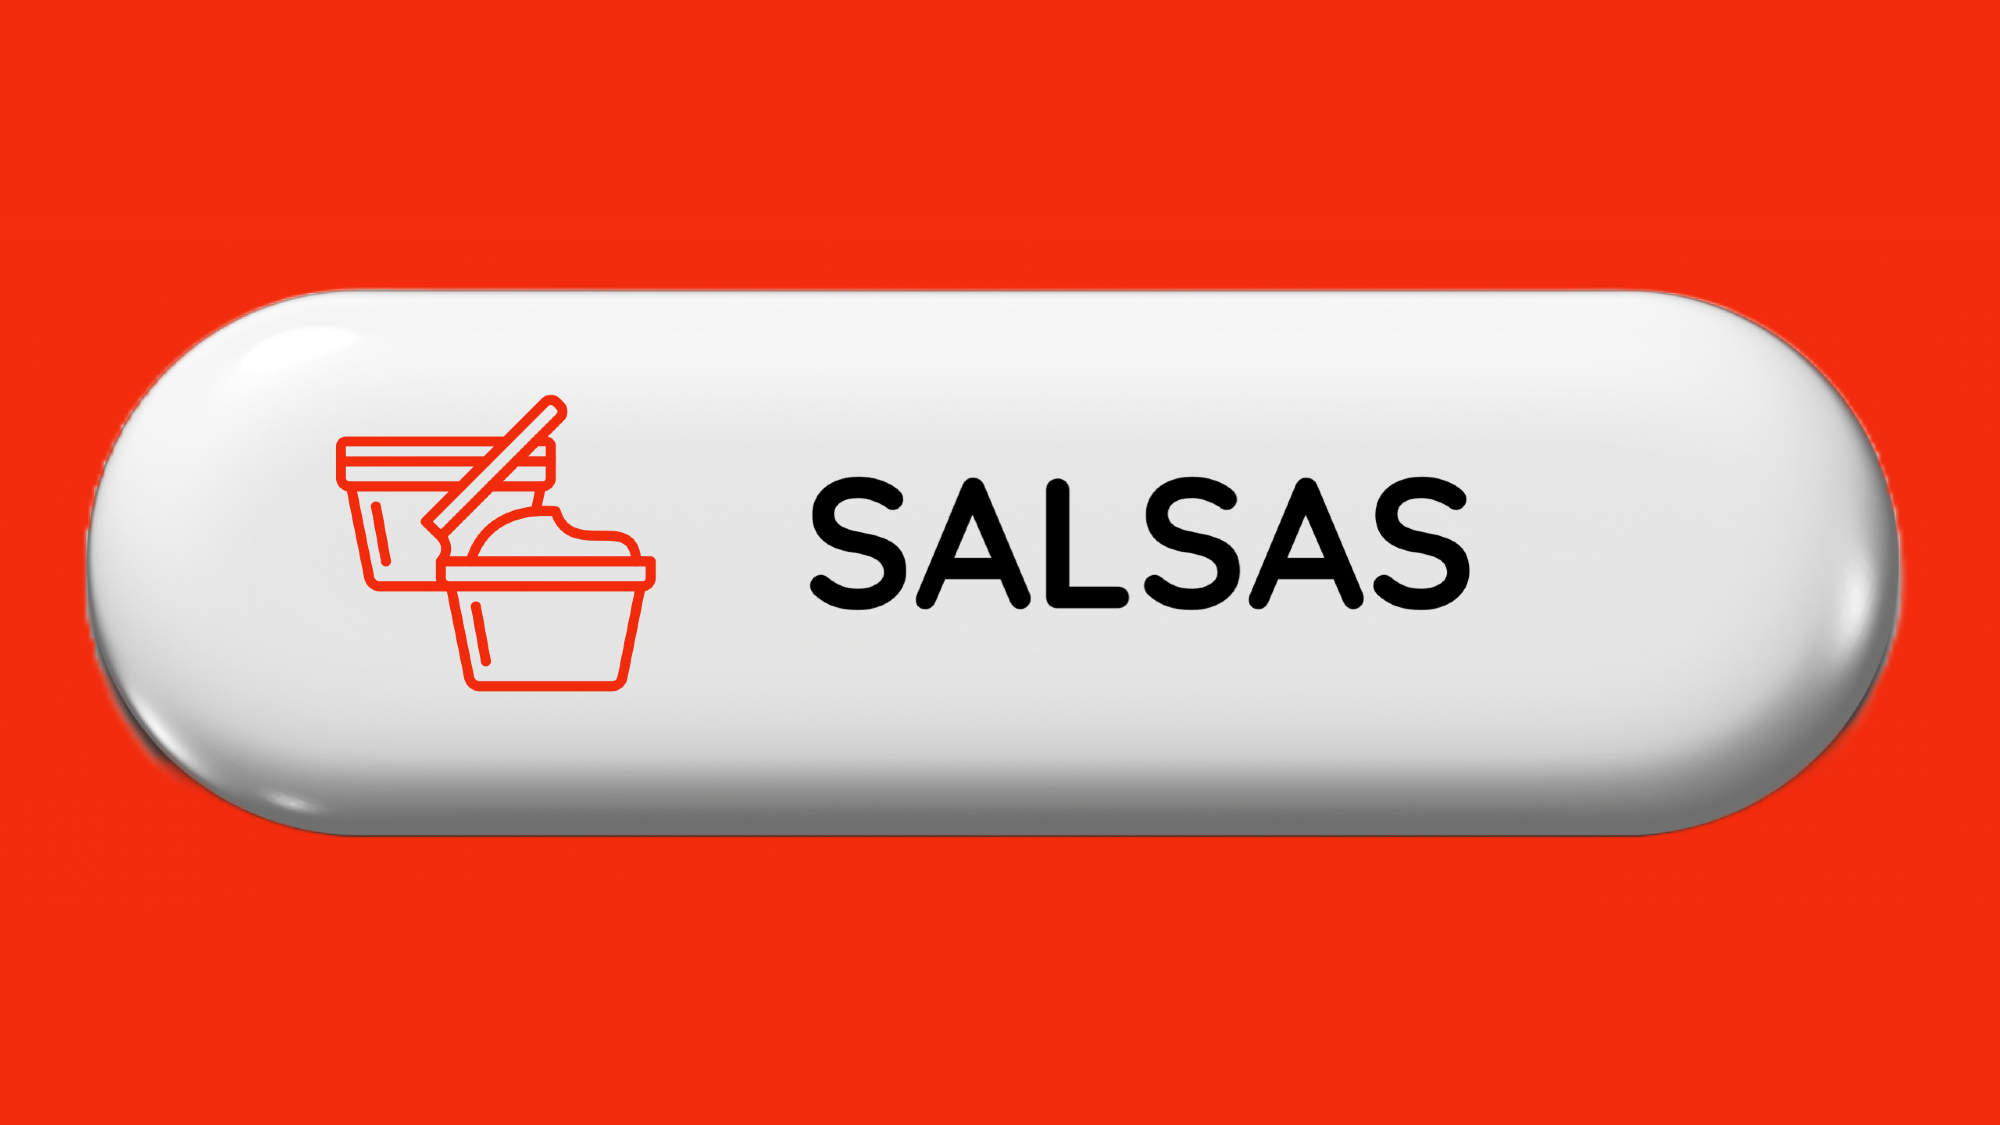 Salsas